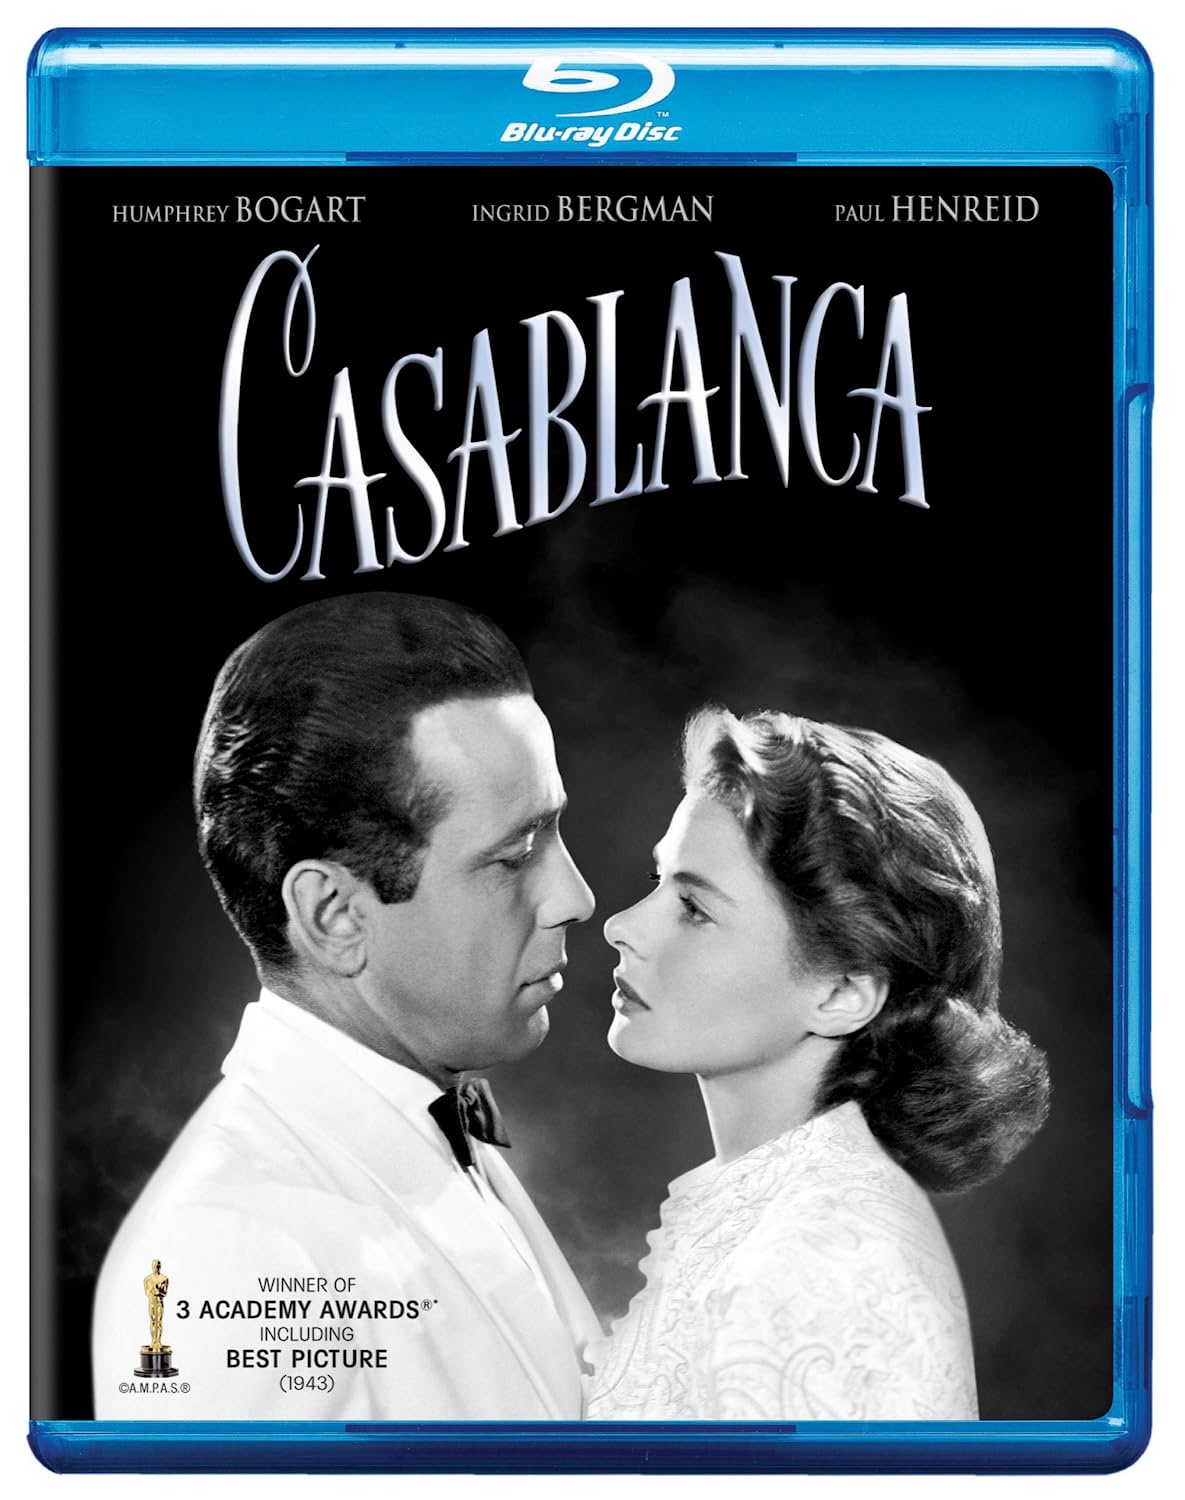 Casablanca (70th Anniversary Edition) - Blu-ray [ 1942 ]  - Classic Movies On Blu-ray - Movies On GRUV